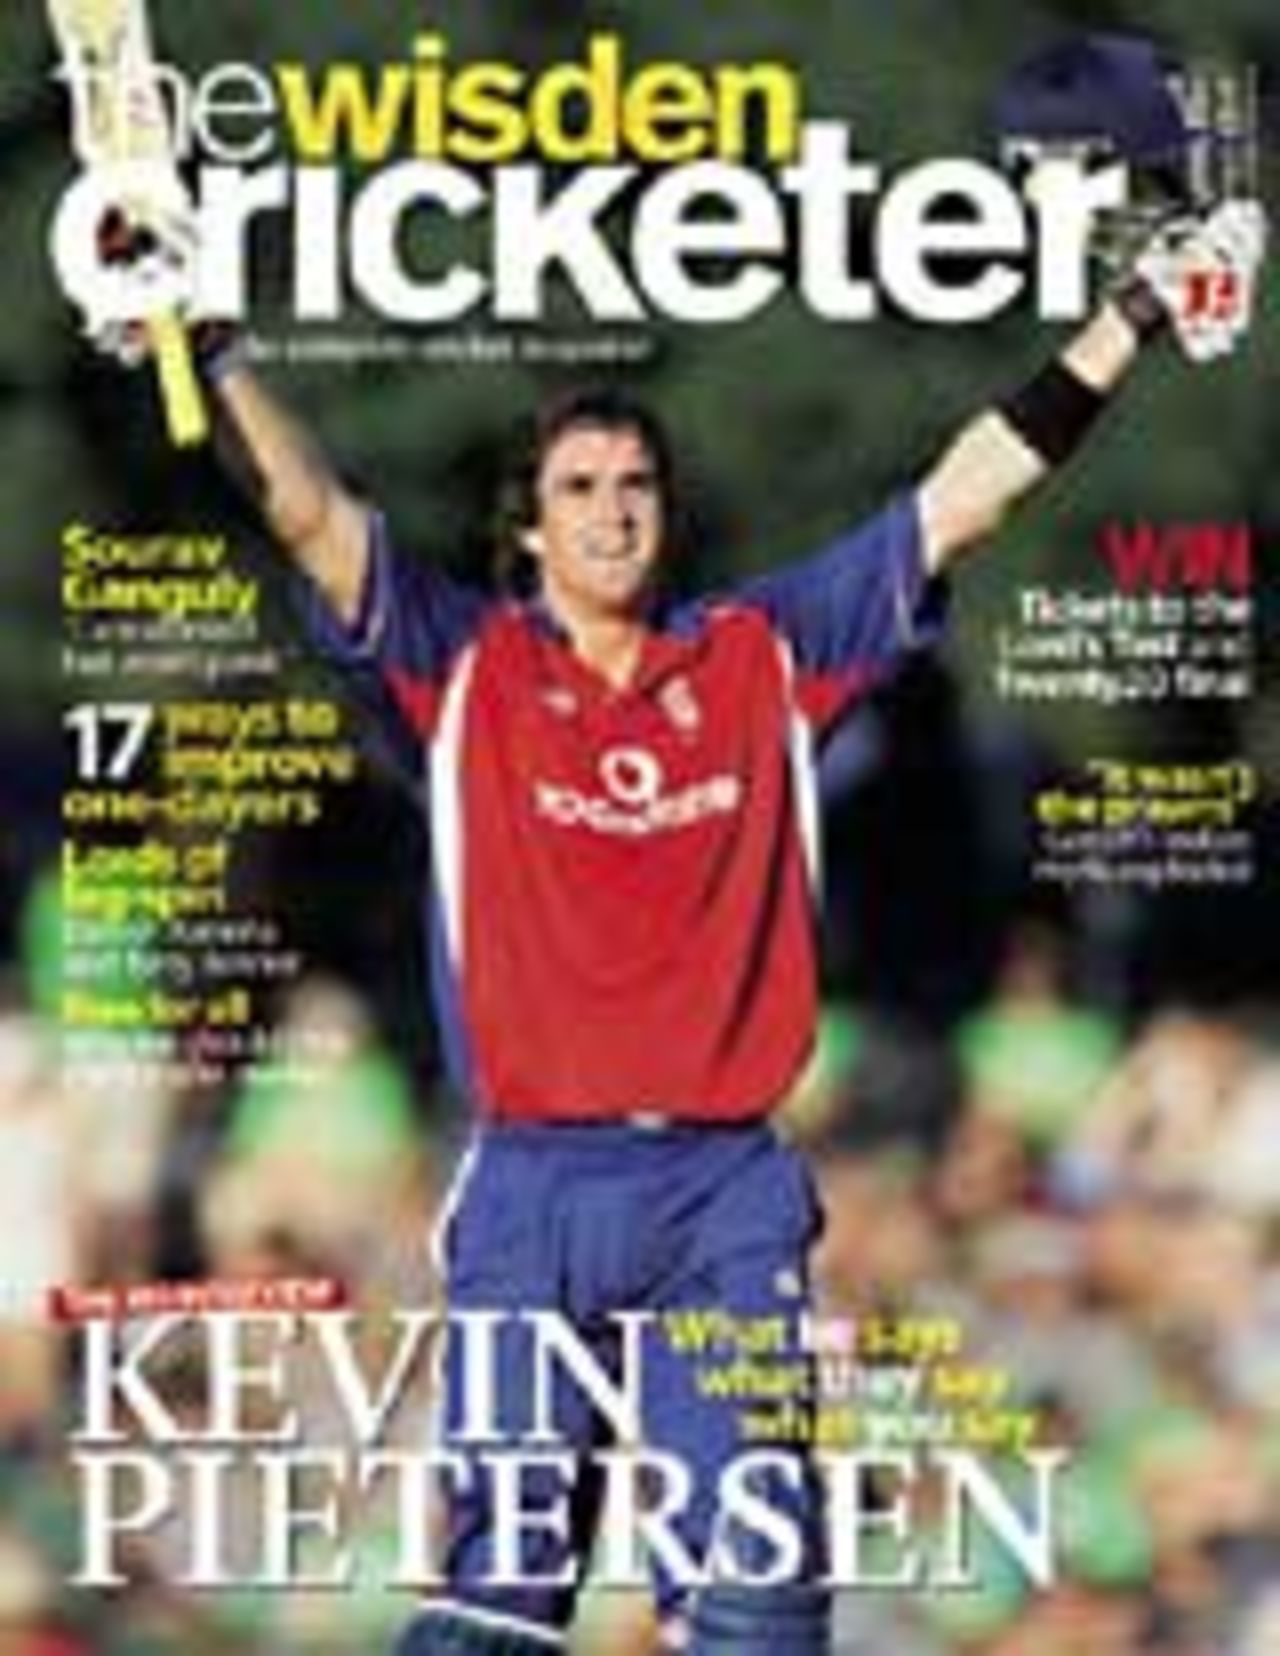 The Wisden Cricketer - April 2005 cover